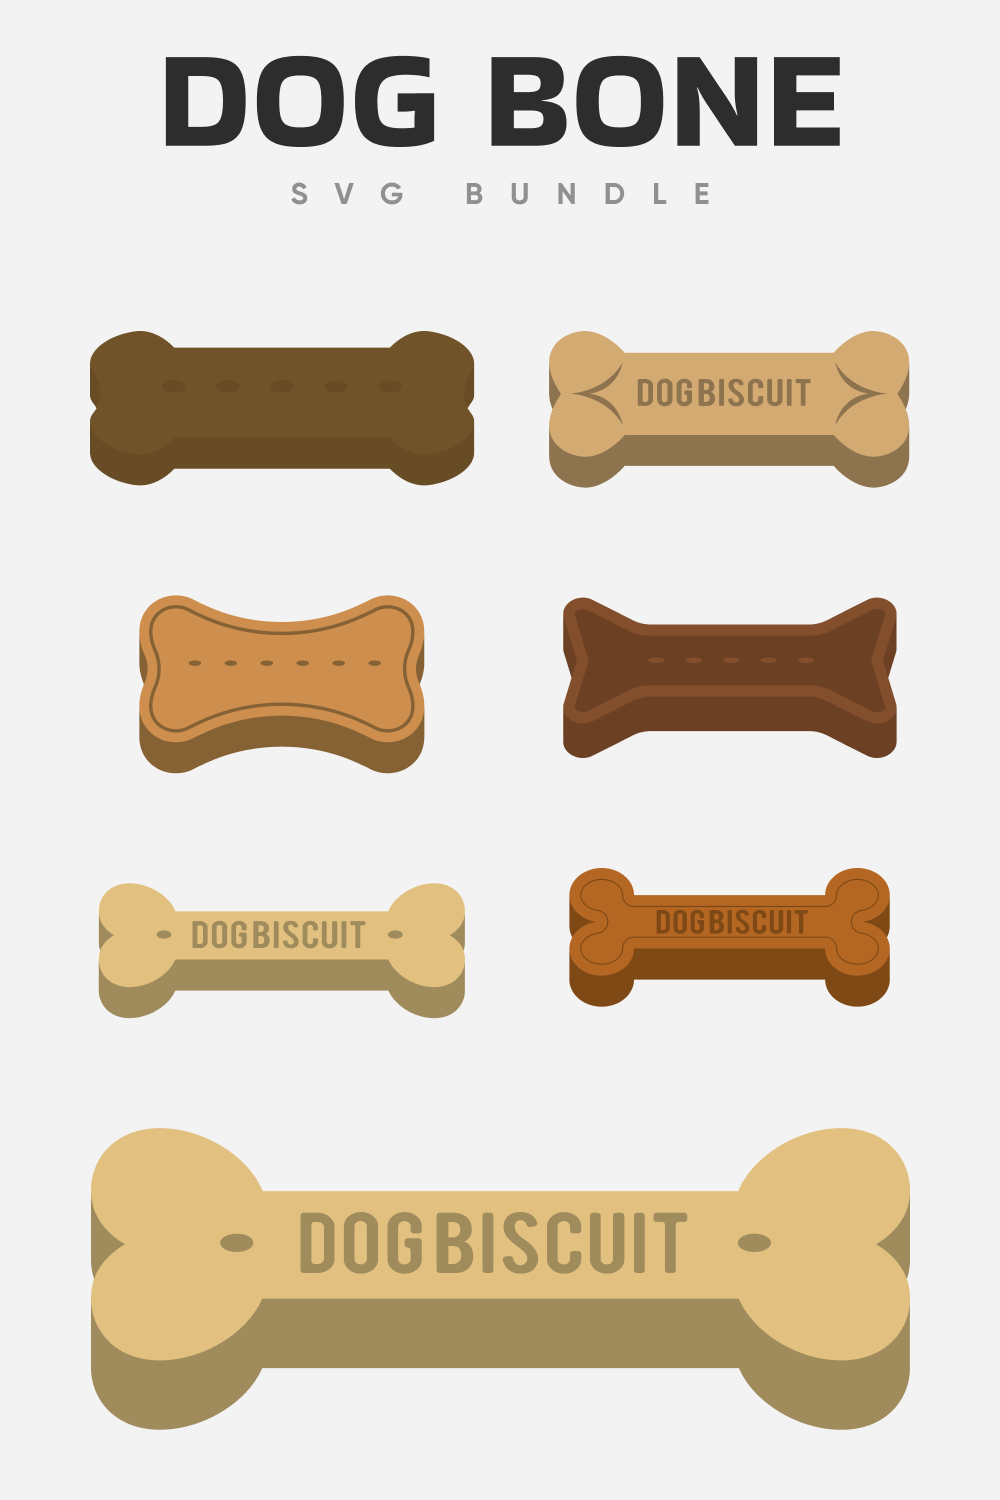 Dog bone SVG bundle.